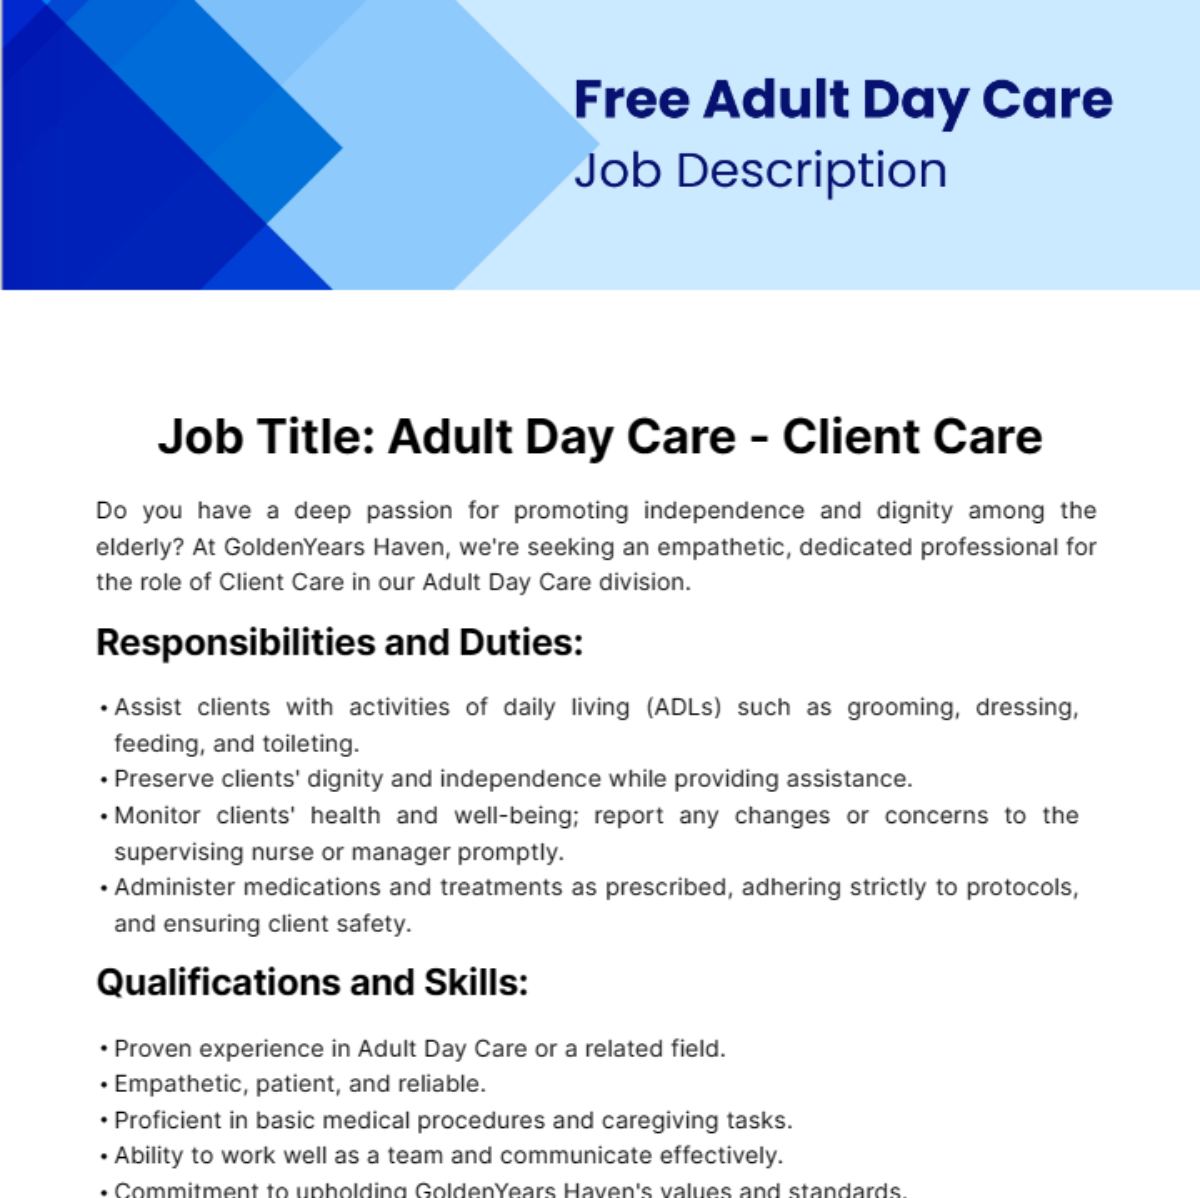 Free Adult Day Care Job Description Template